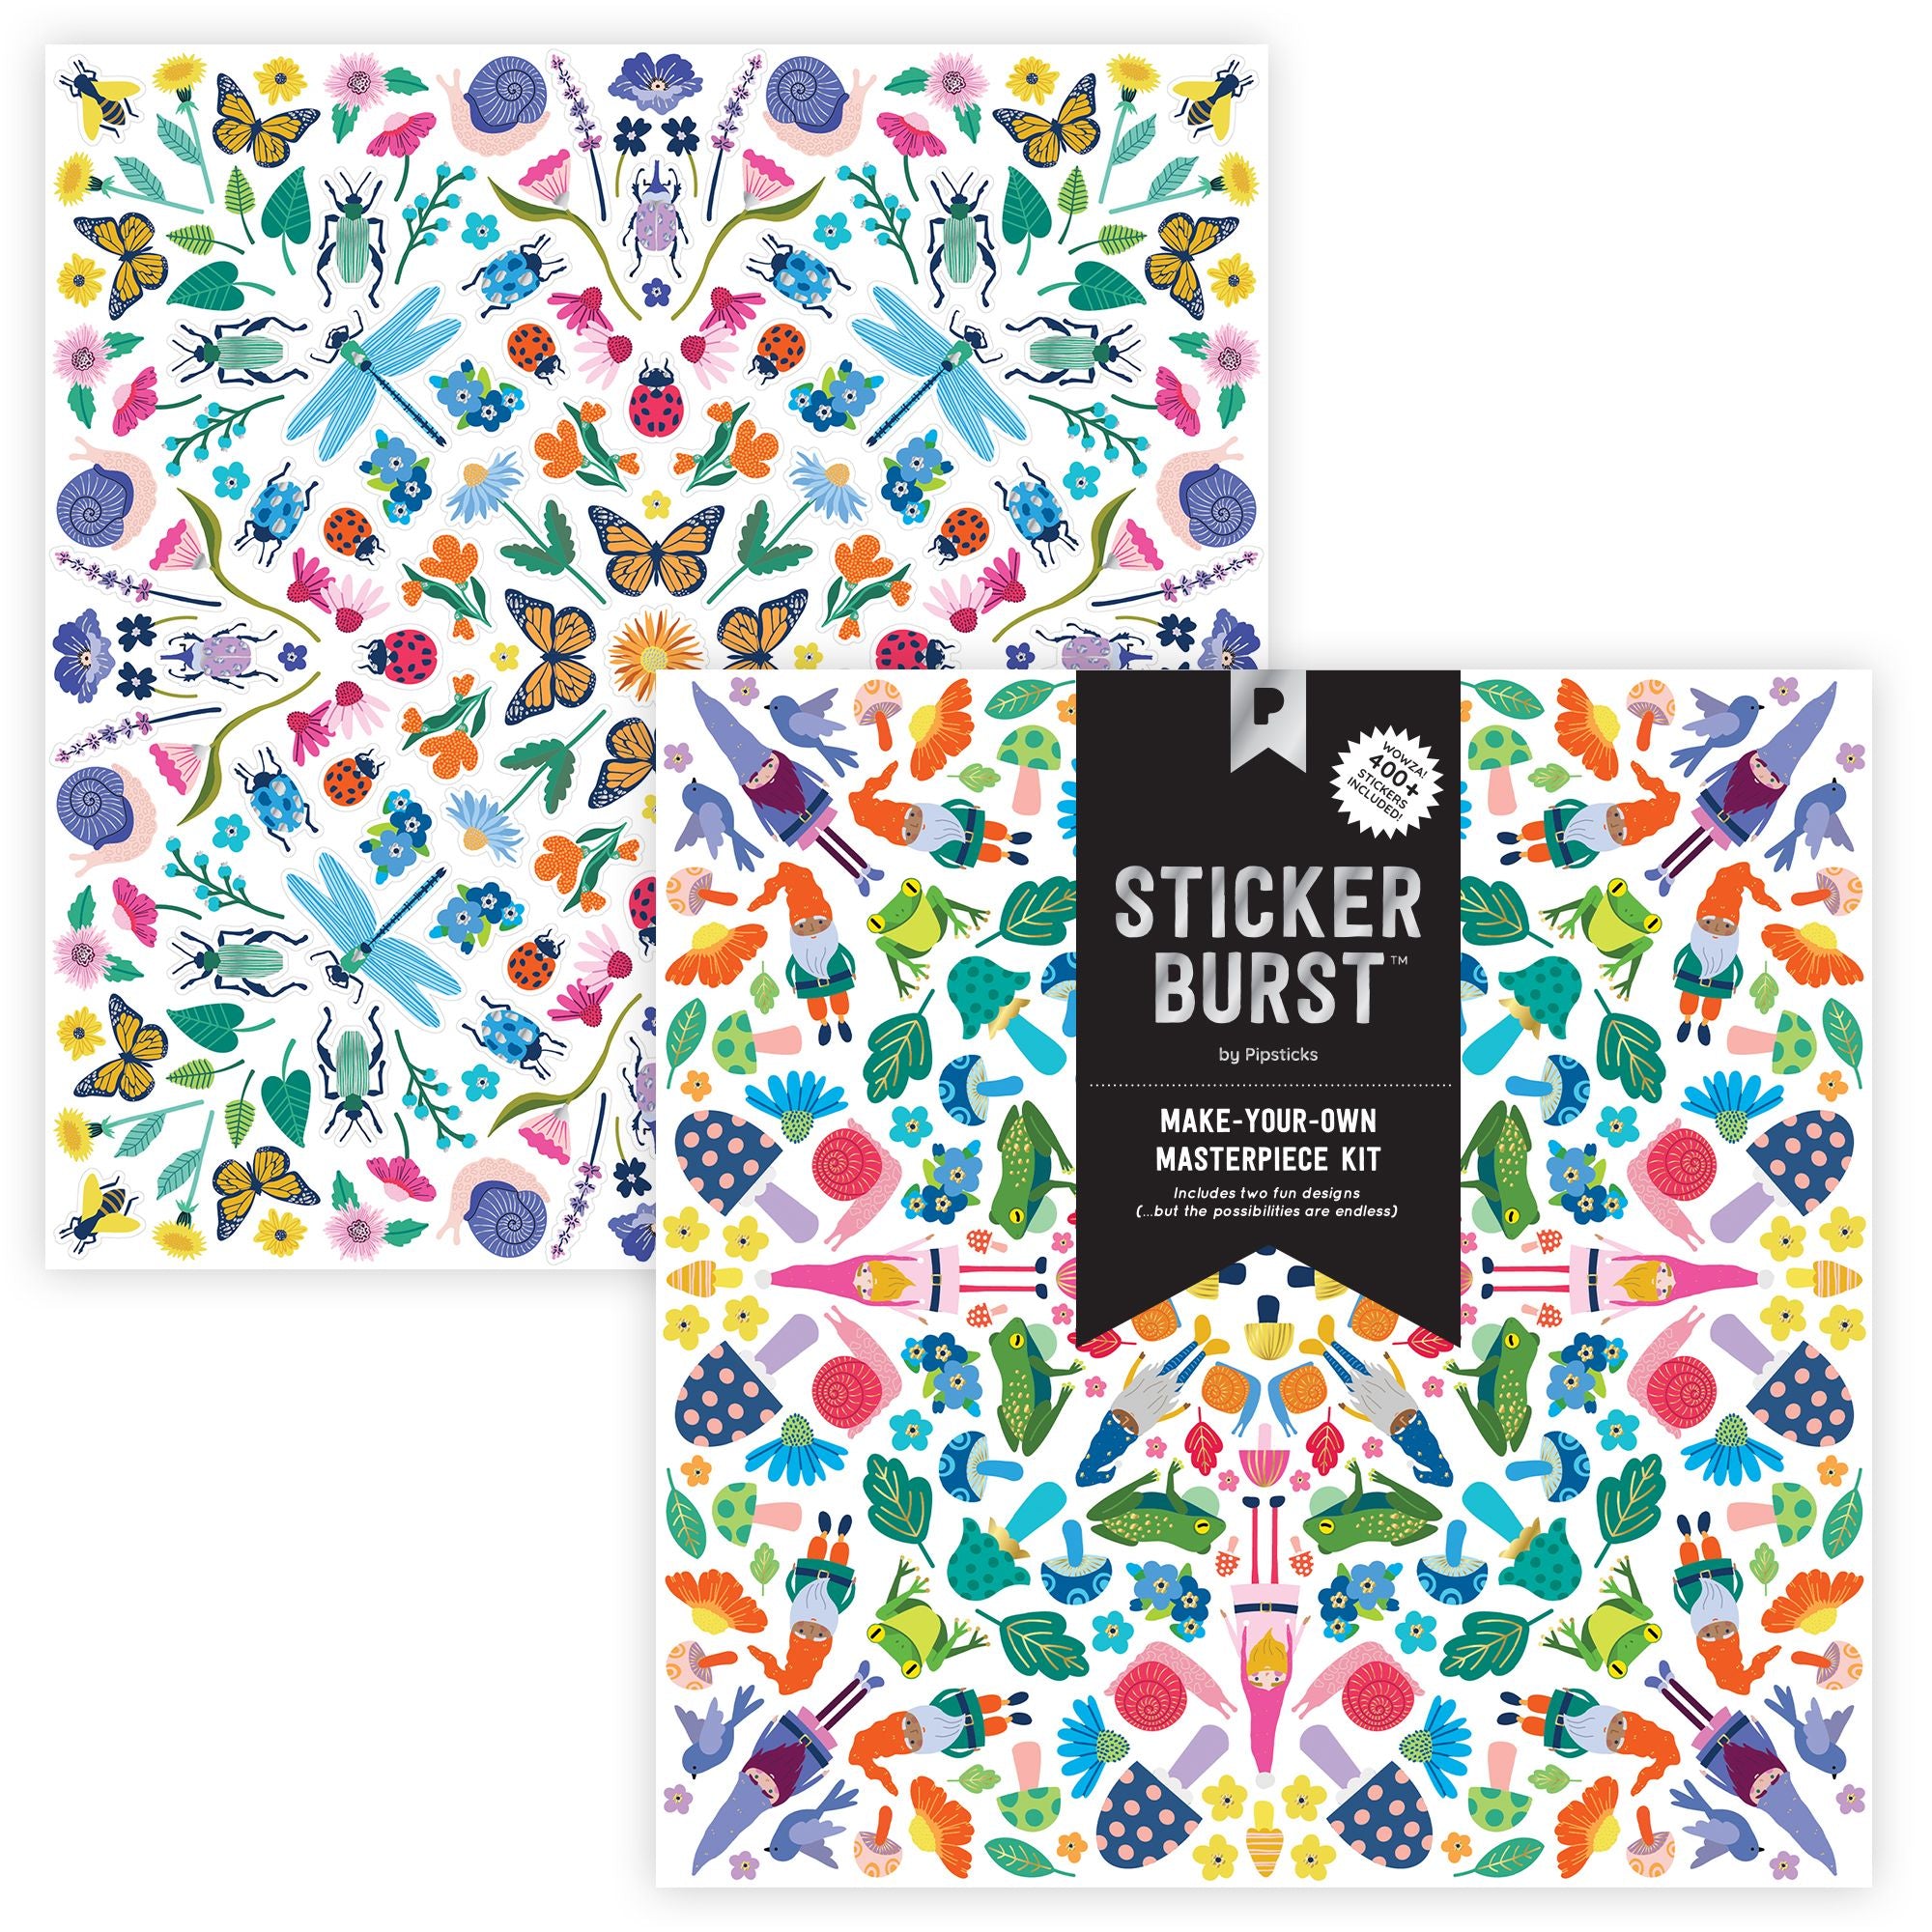 Pipsticks - Pets On Board Sticker